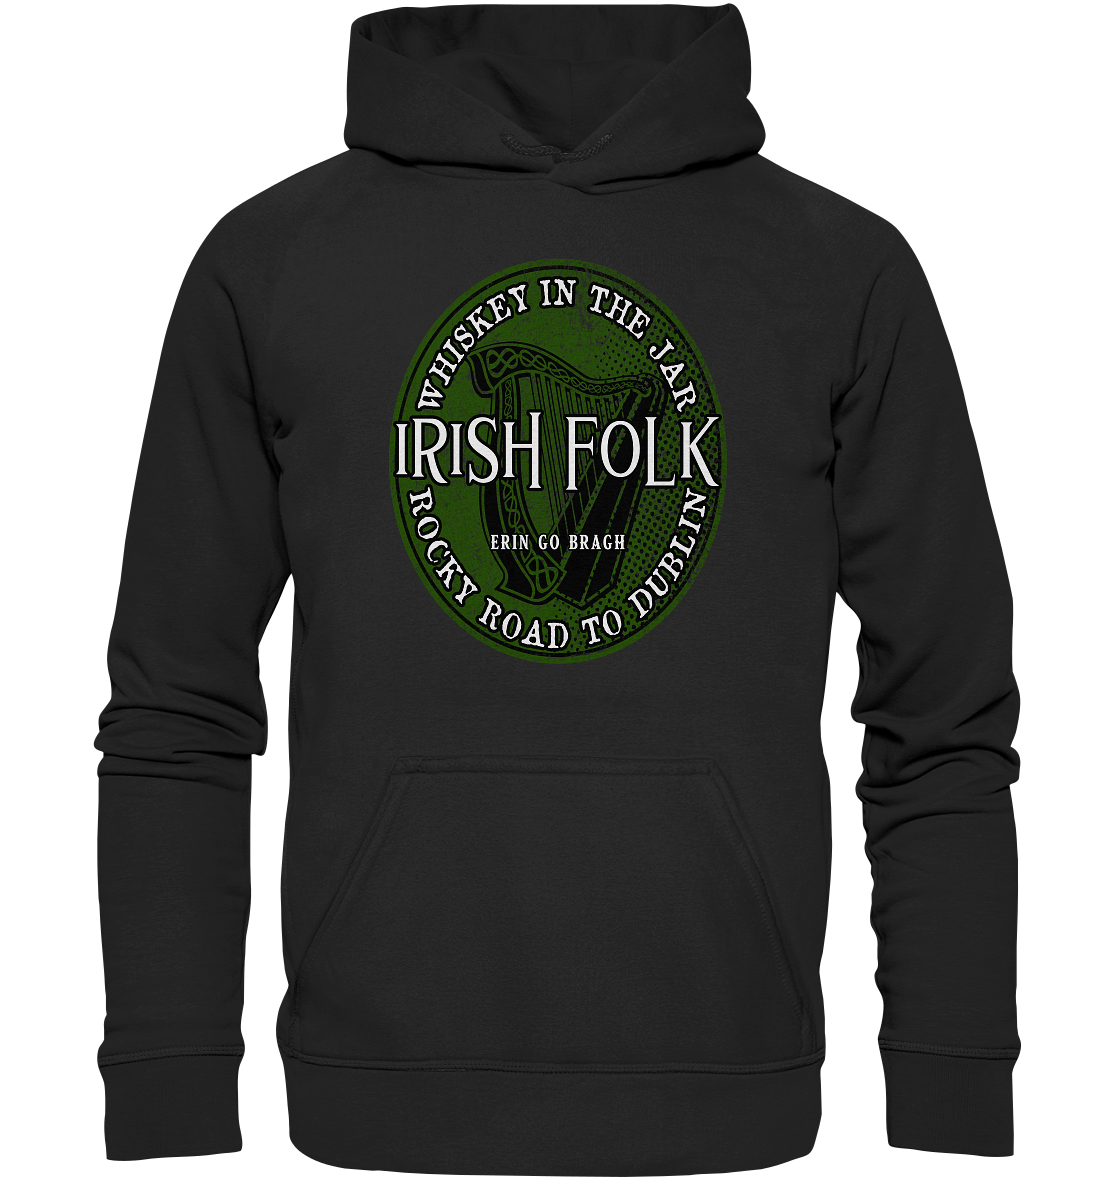 Irish Folk "Erin Go Bragh" - Basic Unisex Hoodie